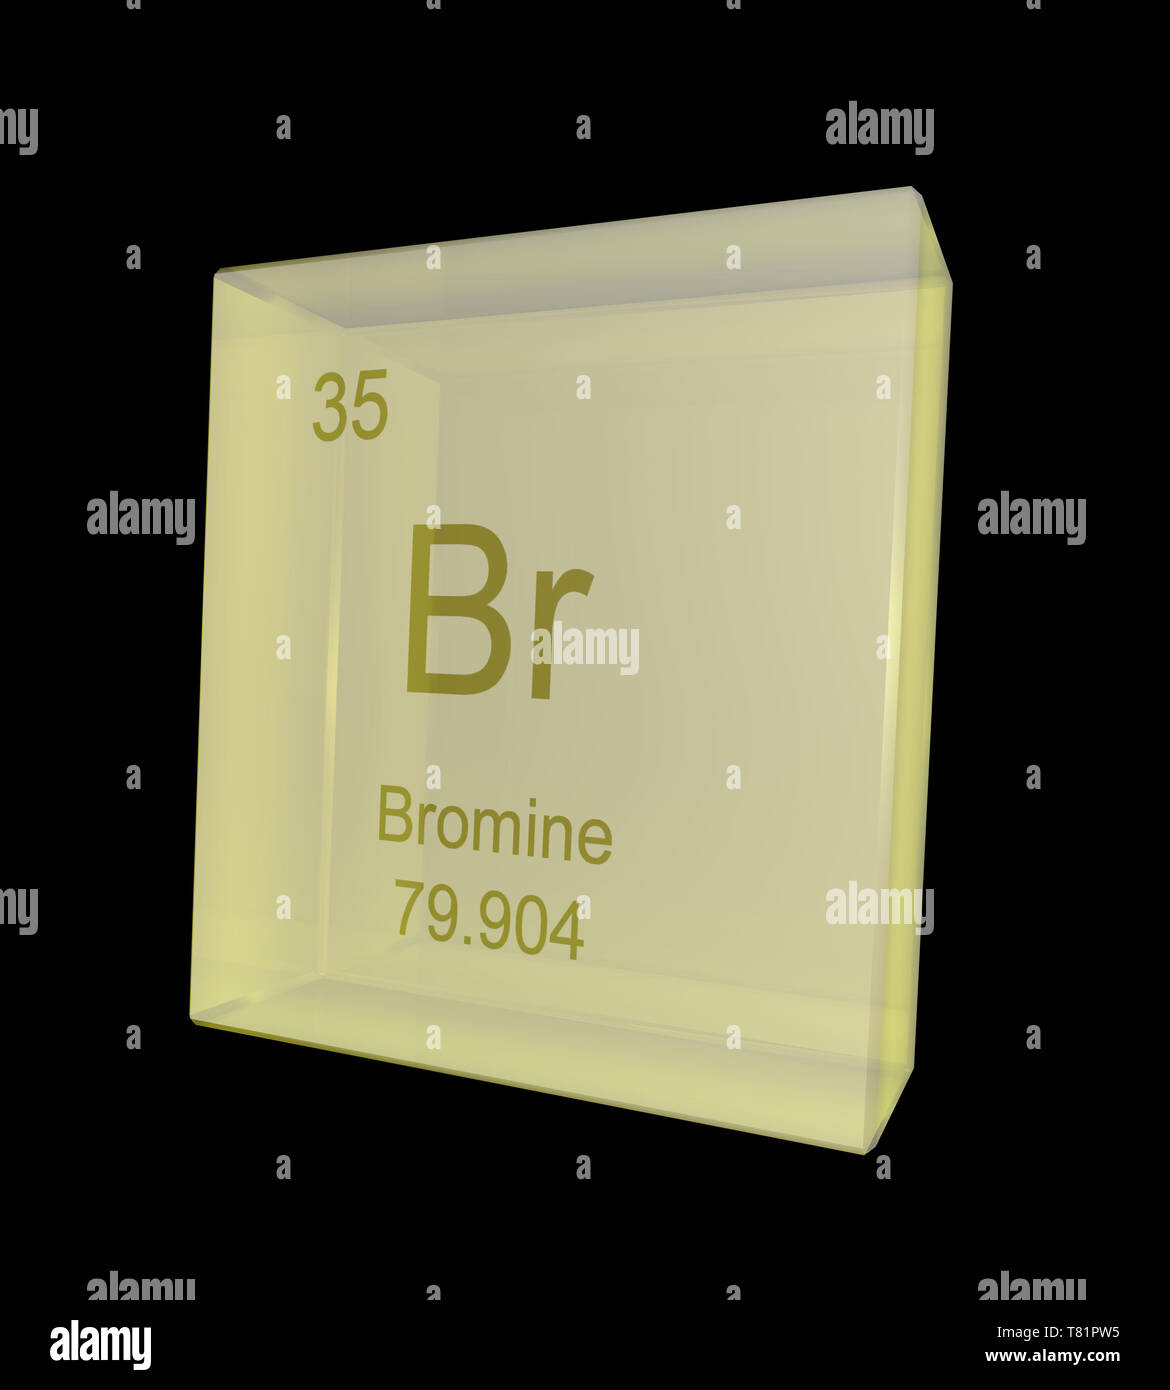 Bromine, Chemical Element Symbol, Illustration Stock Photo